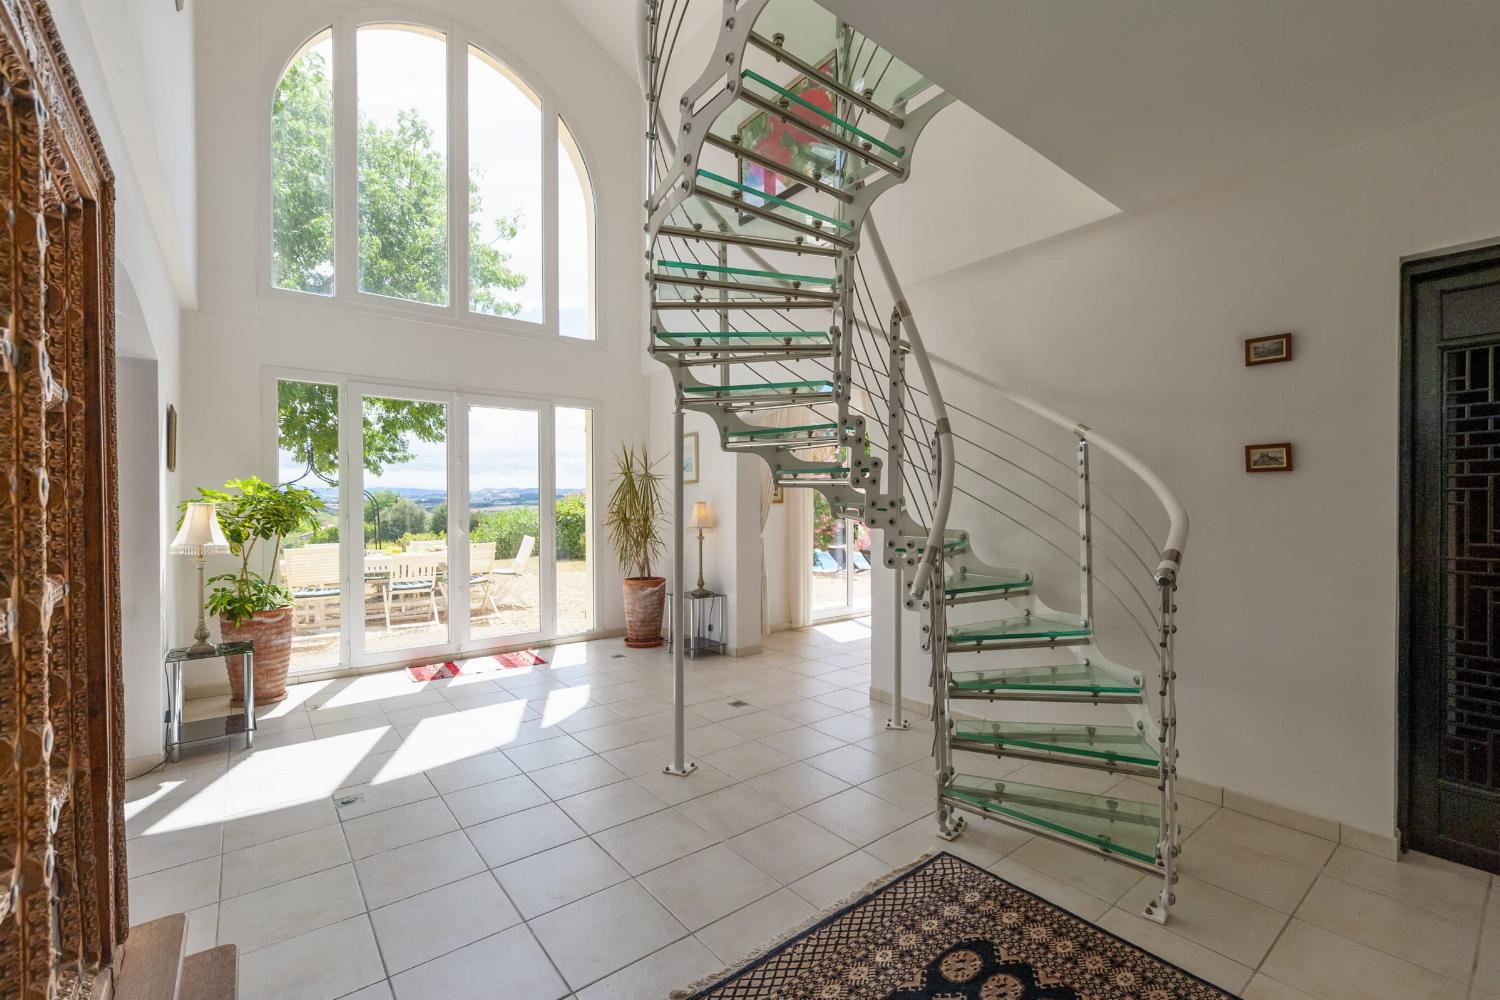 Escalier | Villa de vacances en Occitanie